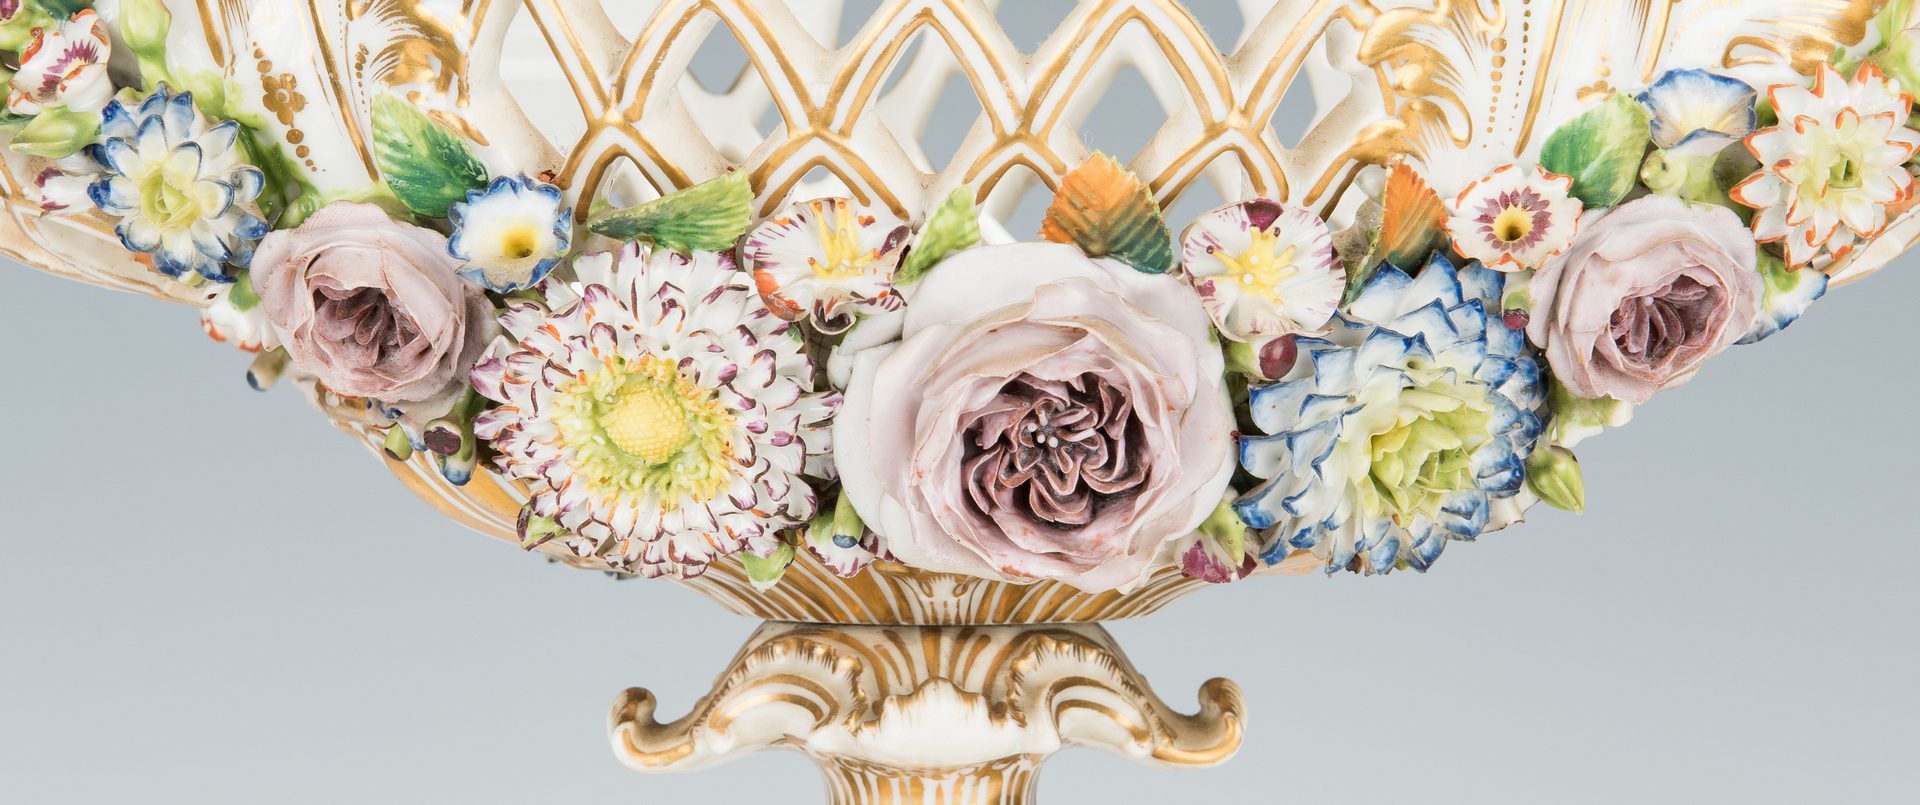 Lot 499: Floral encrusted Centerpiece, Dresden or Old Paris